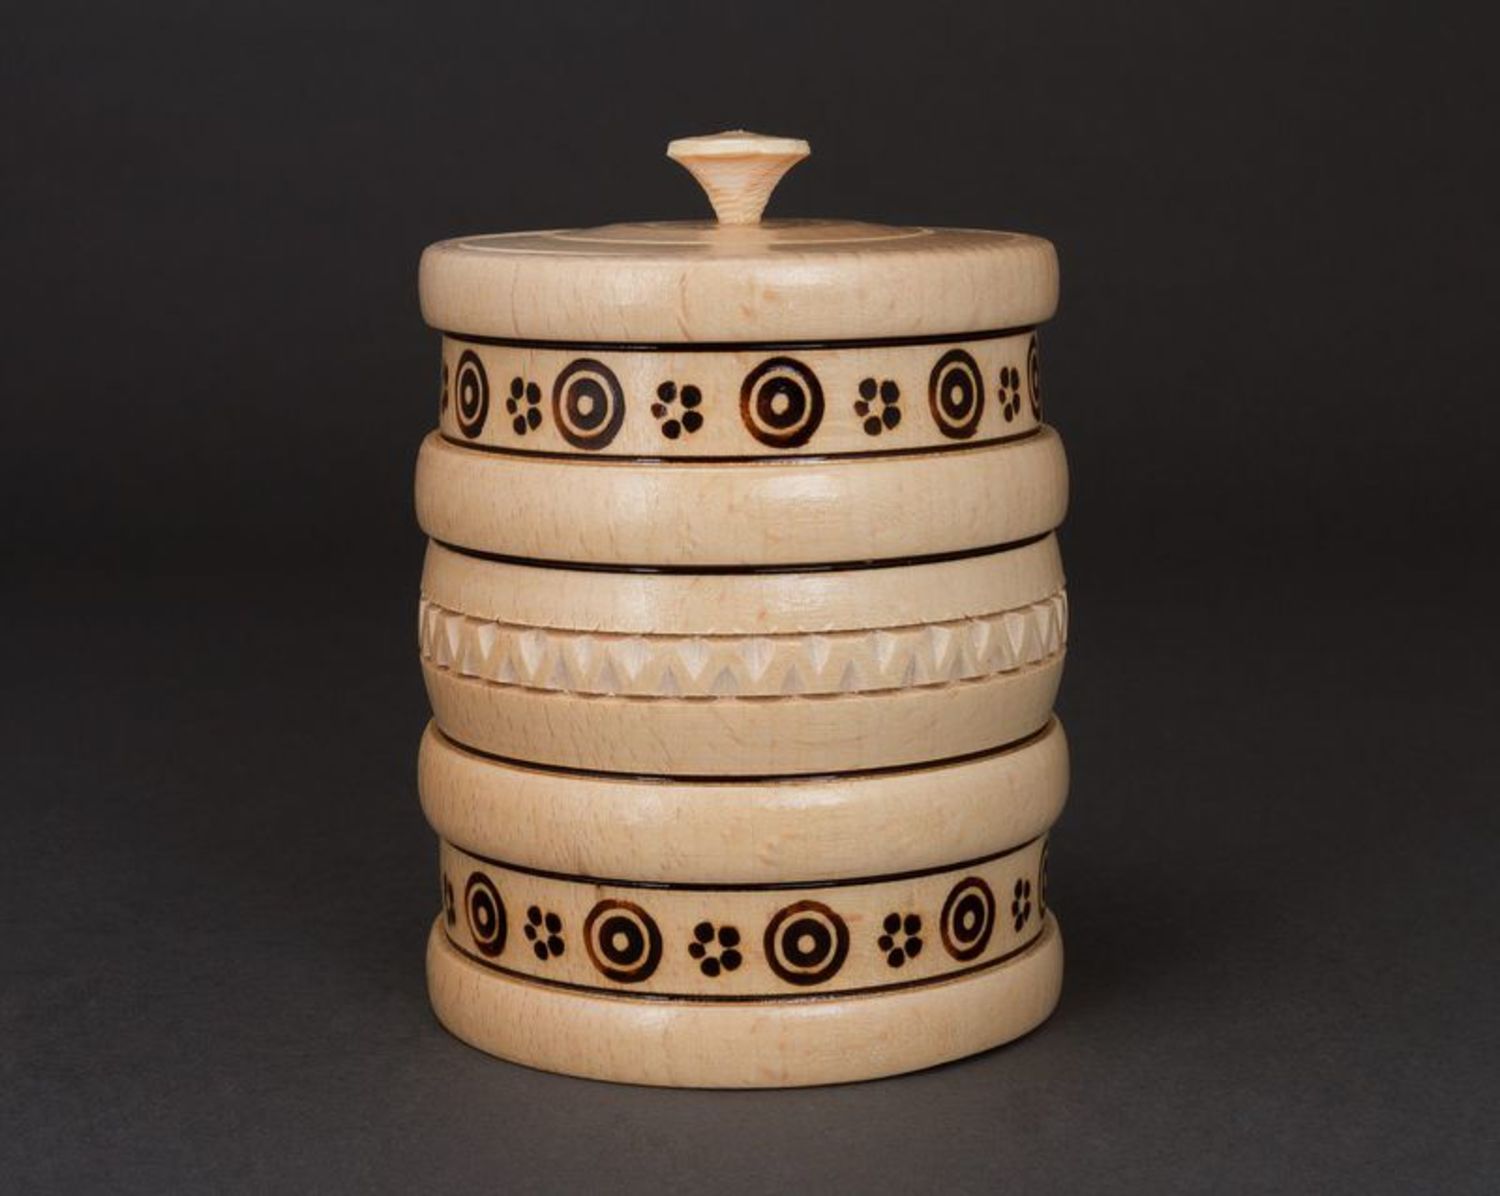 10 oz wooden handmade jar for kitchen décor 0,6 lb photo 1